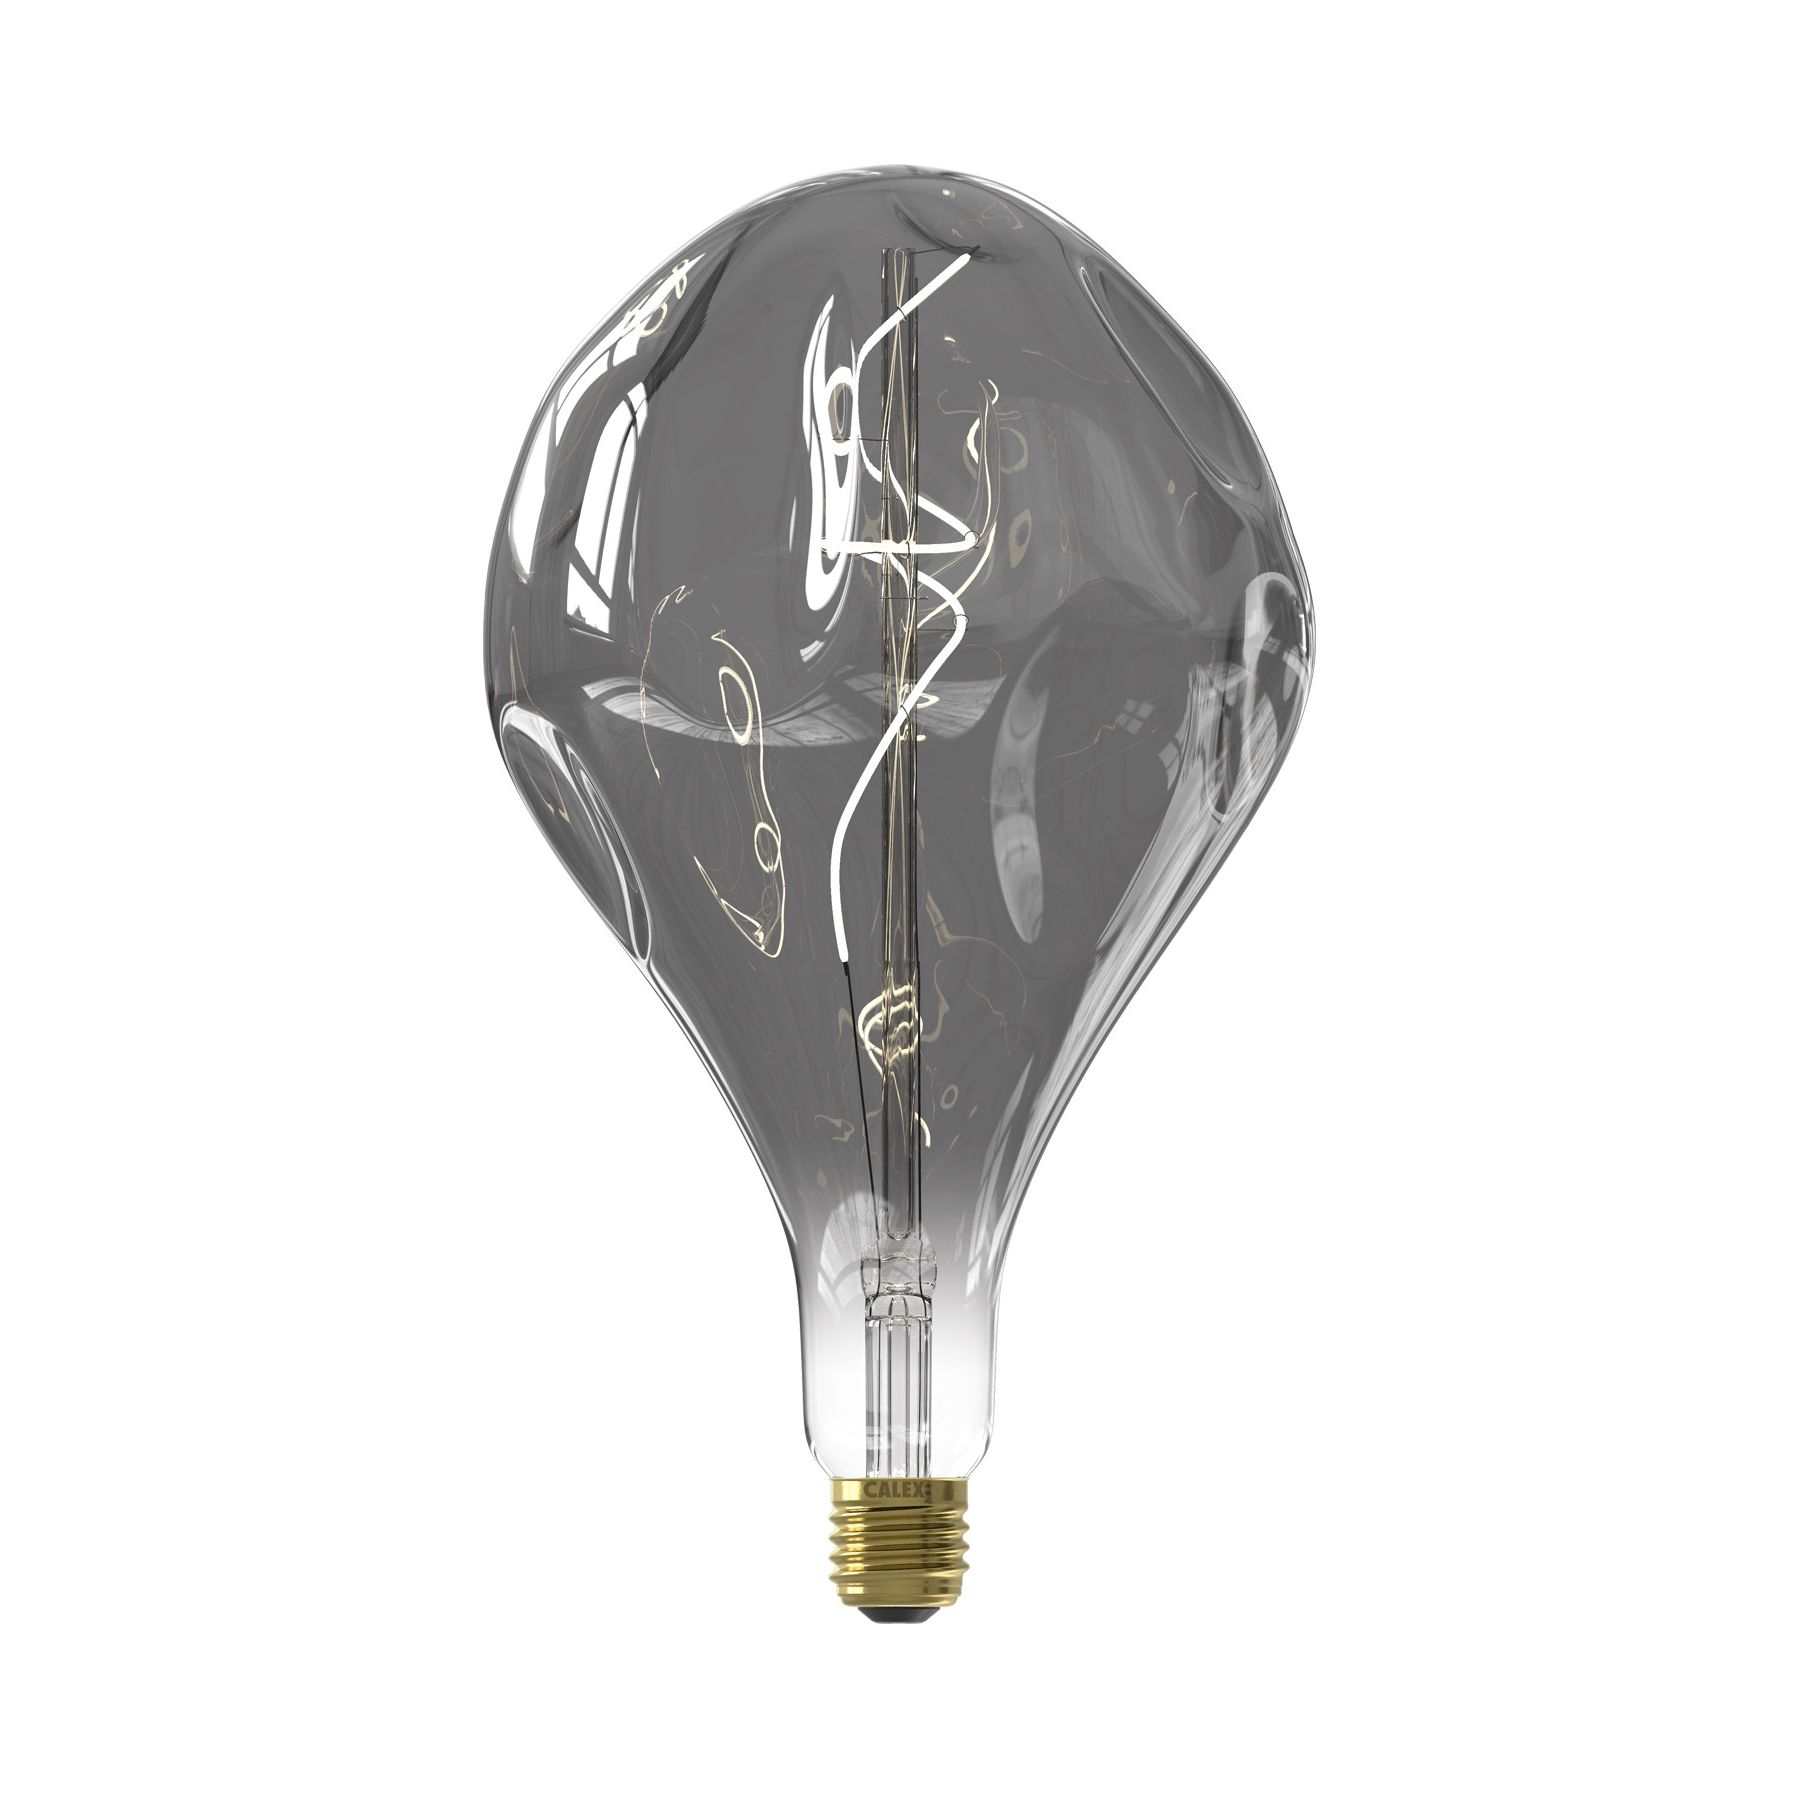 Stadion Gelukkig ik ben slaperig Calex Smart XXL LED lamp - Ø 16,5 x 28 cm - E27 - 6W - dimfunctie via app -  2100K - titanium | Lichtkoning